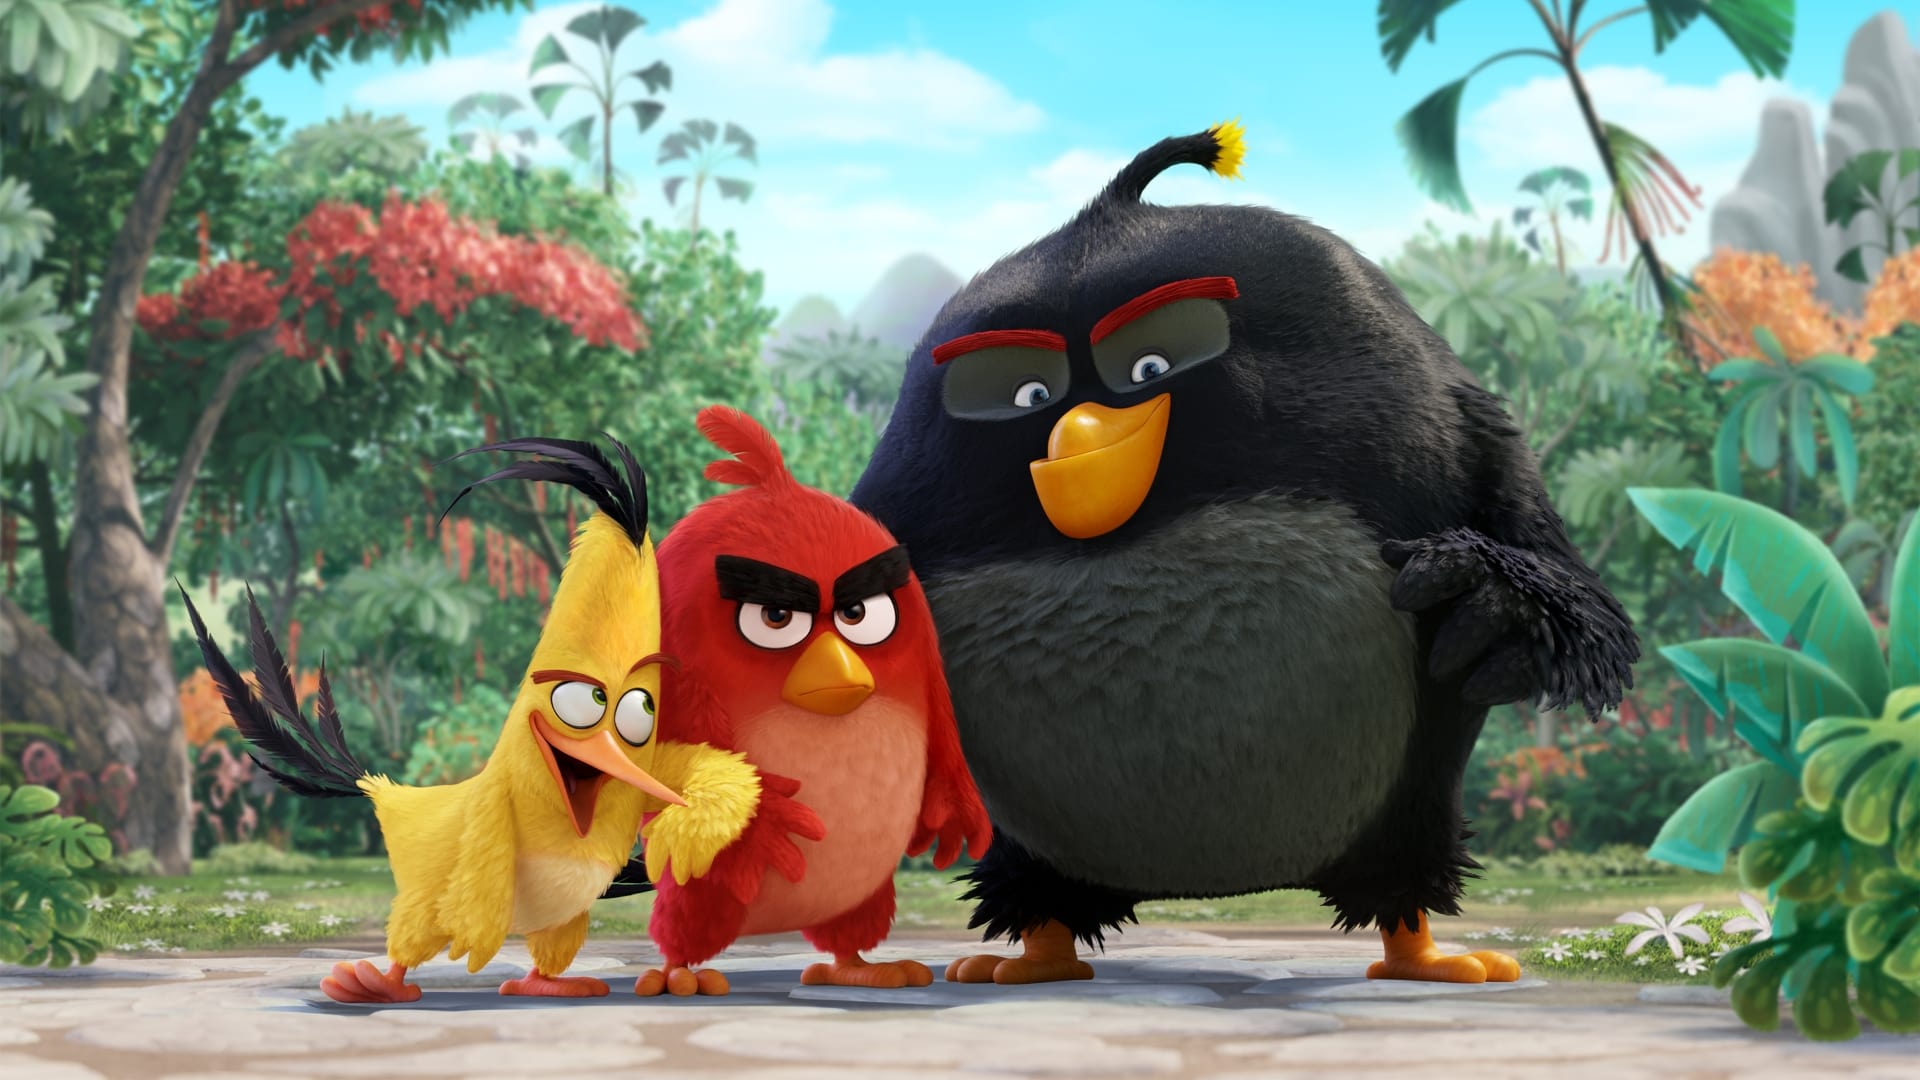 Angry Birds - Der Film (2016)